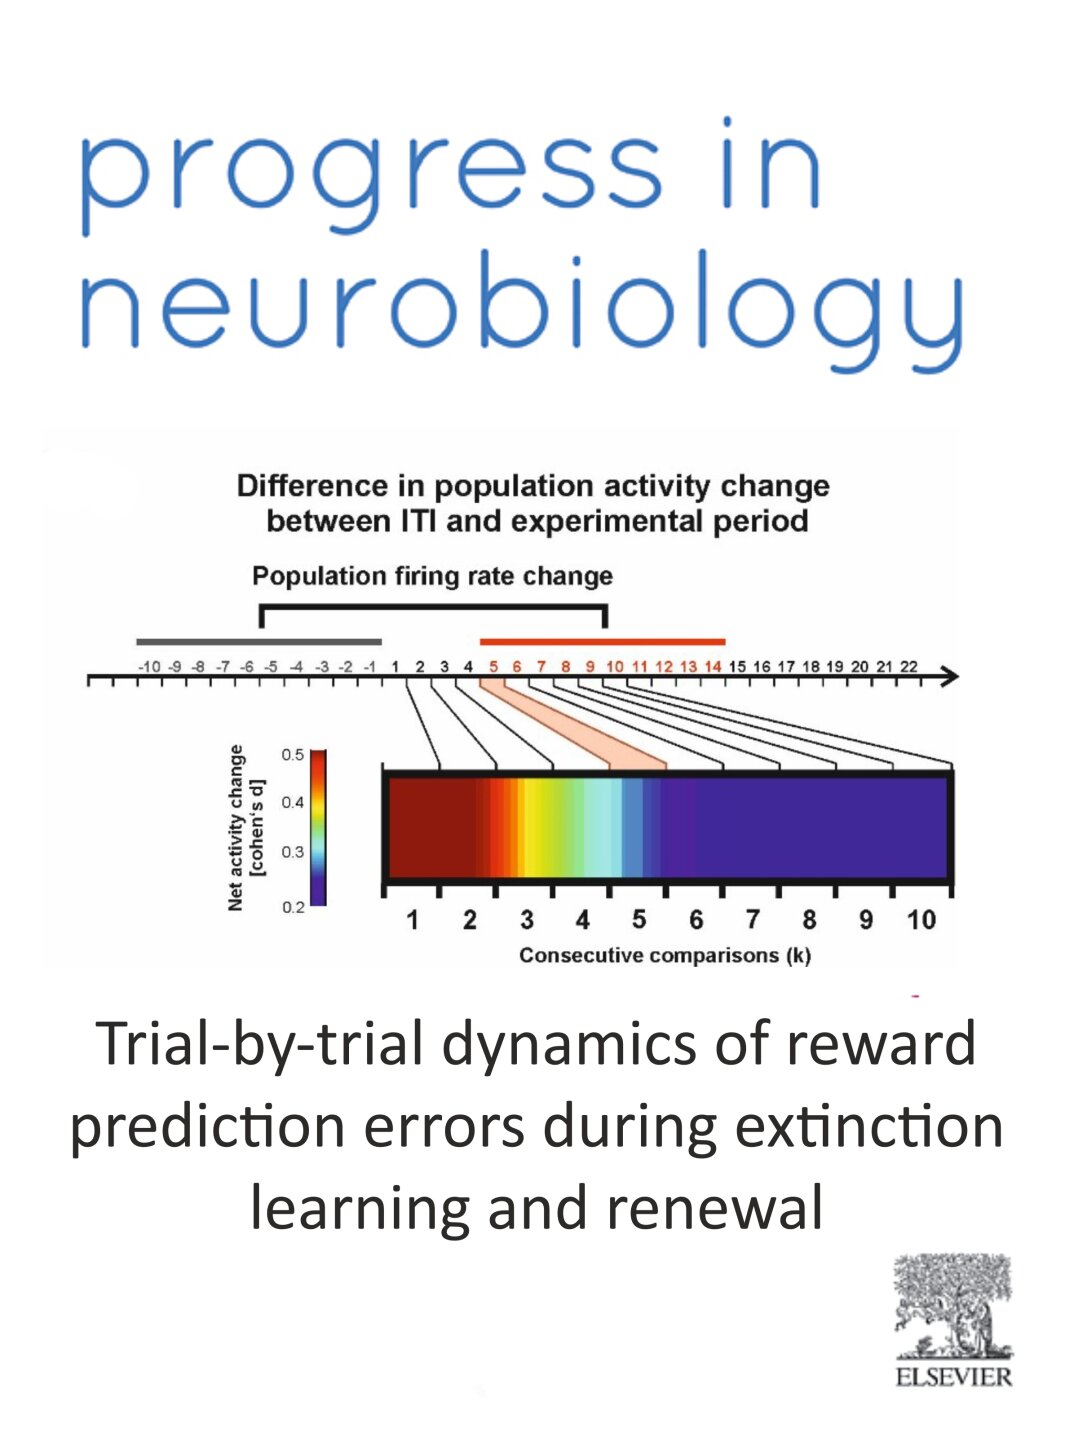 Reward prediction errors during extinction learning